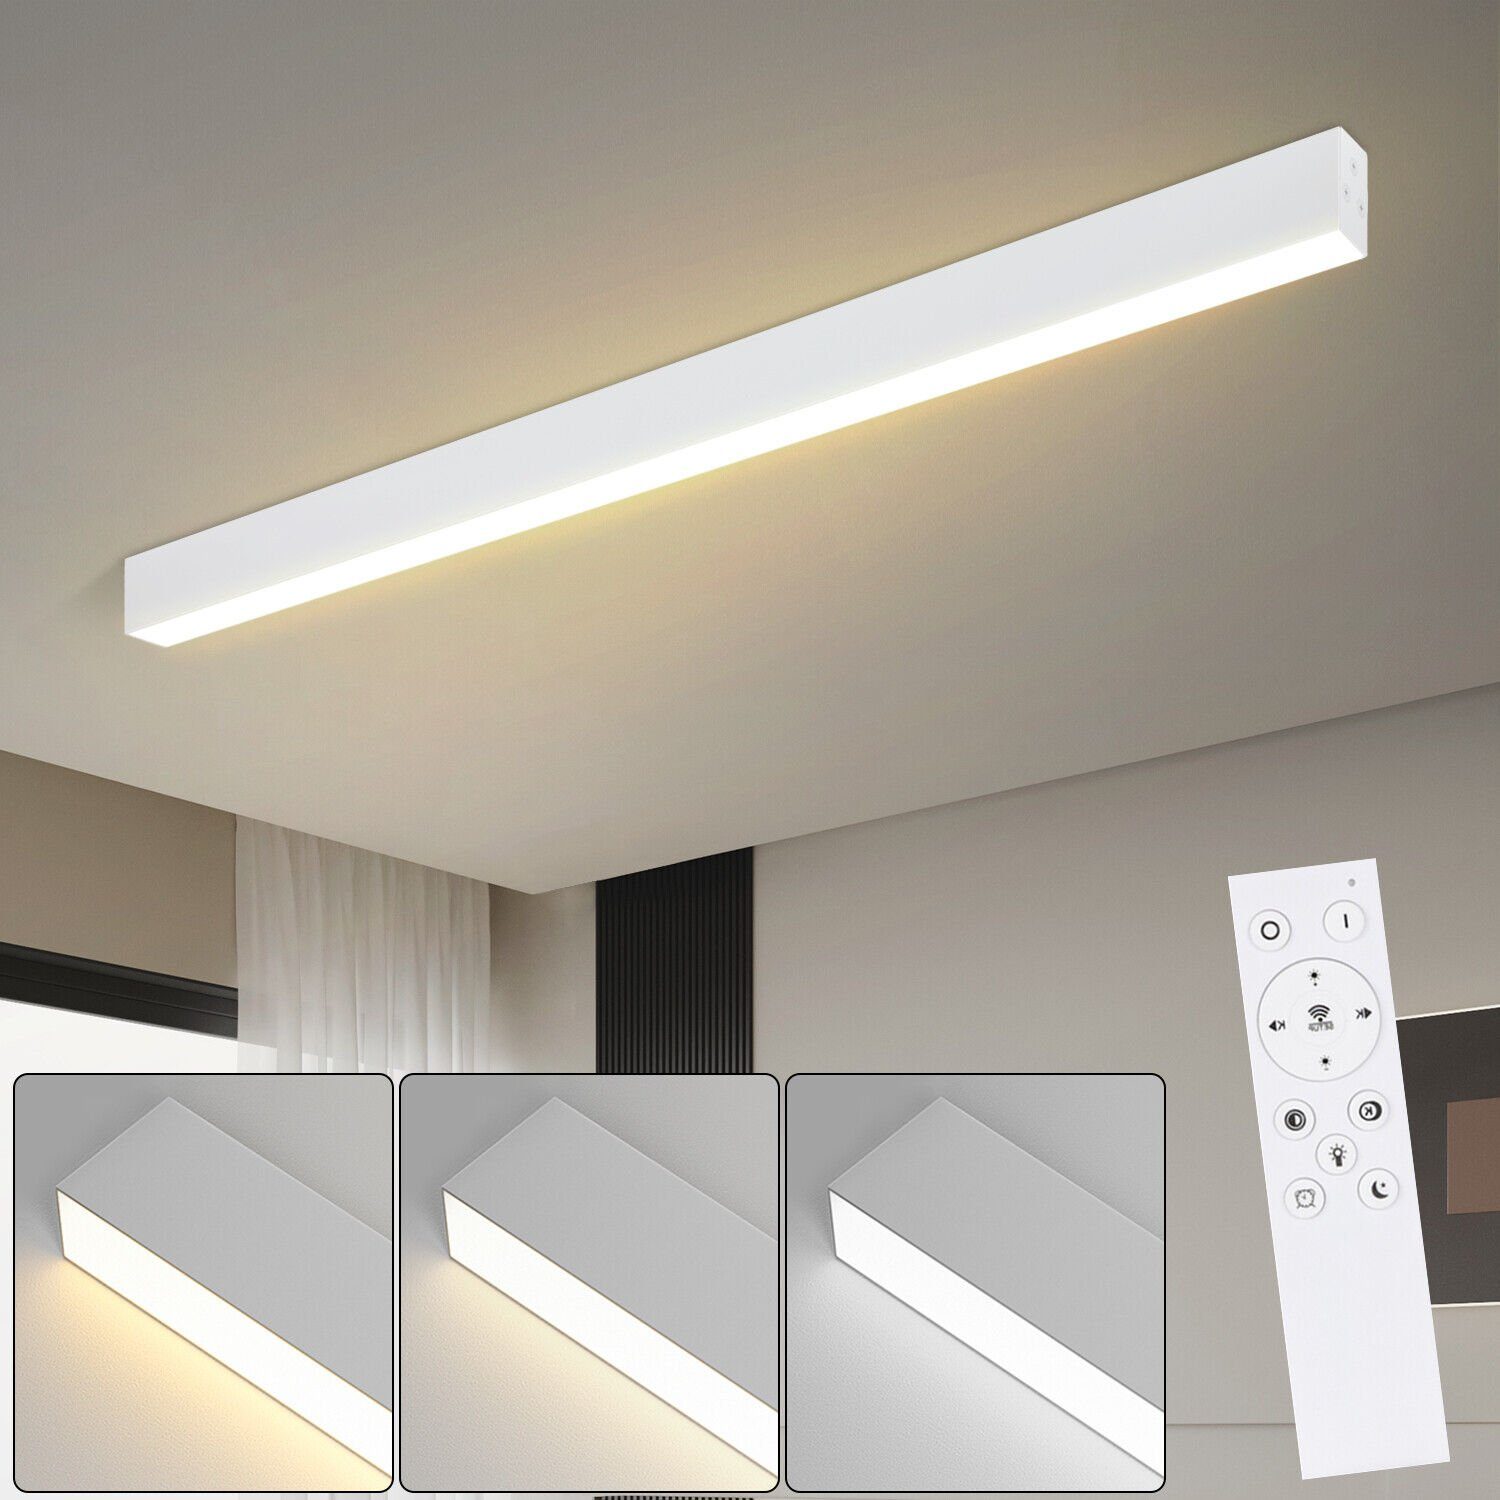 ZMH Deckenleuchten Dimmbar Bürolampe Decke Modern Design Mit Fernbedienung, dimmbar, LED fest integriert, Tageslichtweiß | Deckenlampen